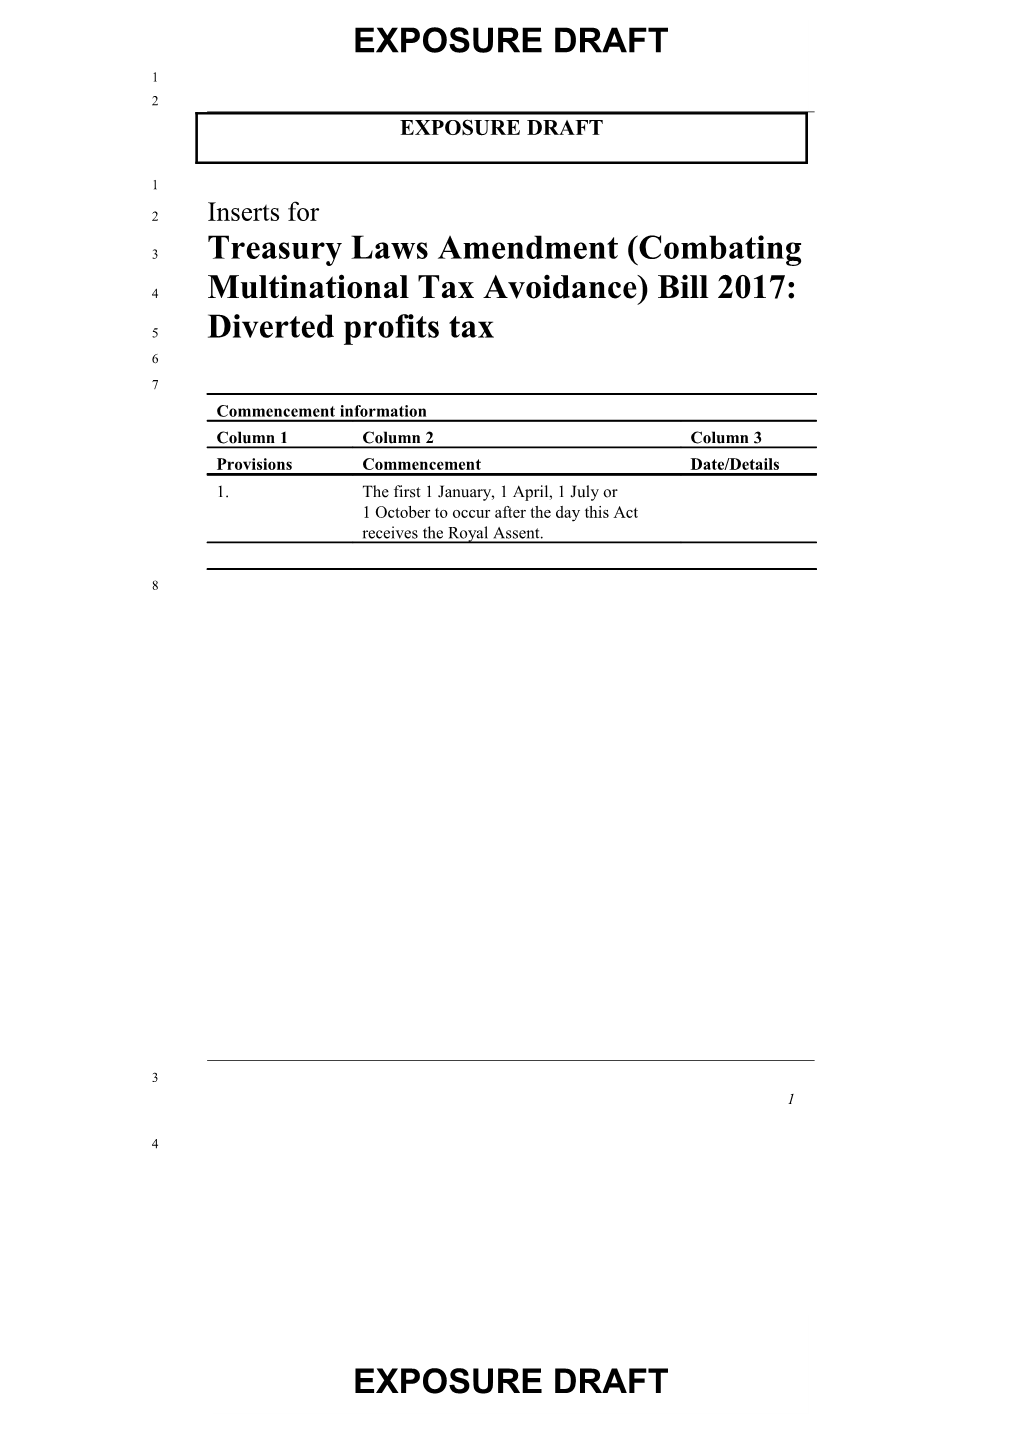 Treasury Laws Amendment (Combating Multinational Tax Avoidance) Bill 2017: Diverted Profits